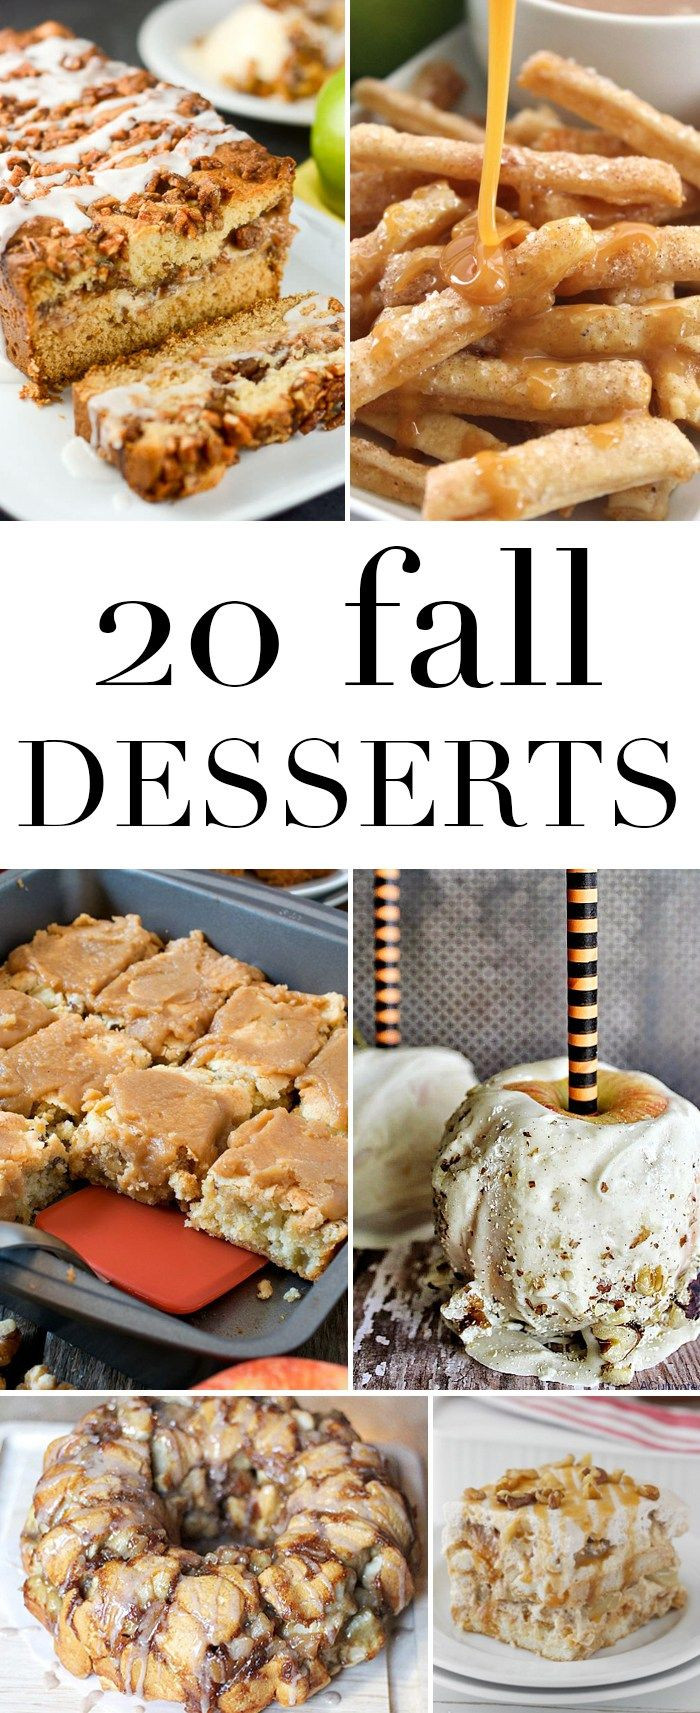 Fall Desserts Pinterest
 92 best images about Seasonal Fall on Pinterest